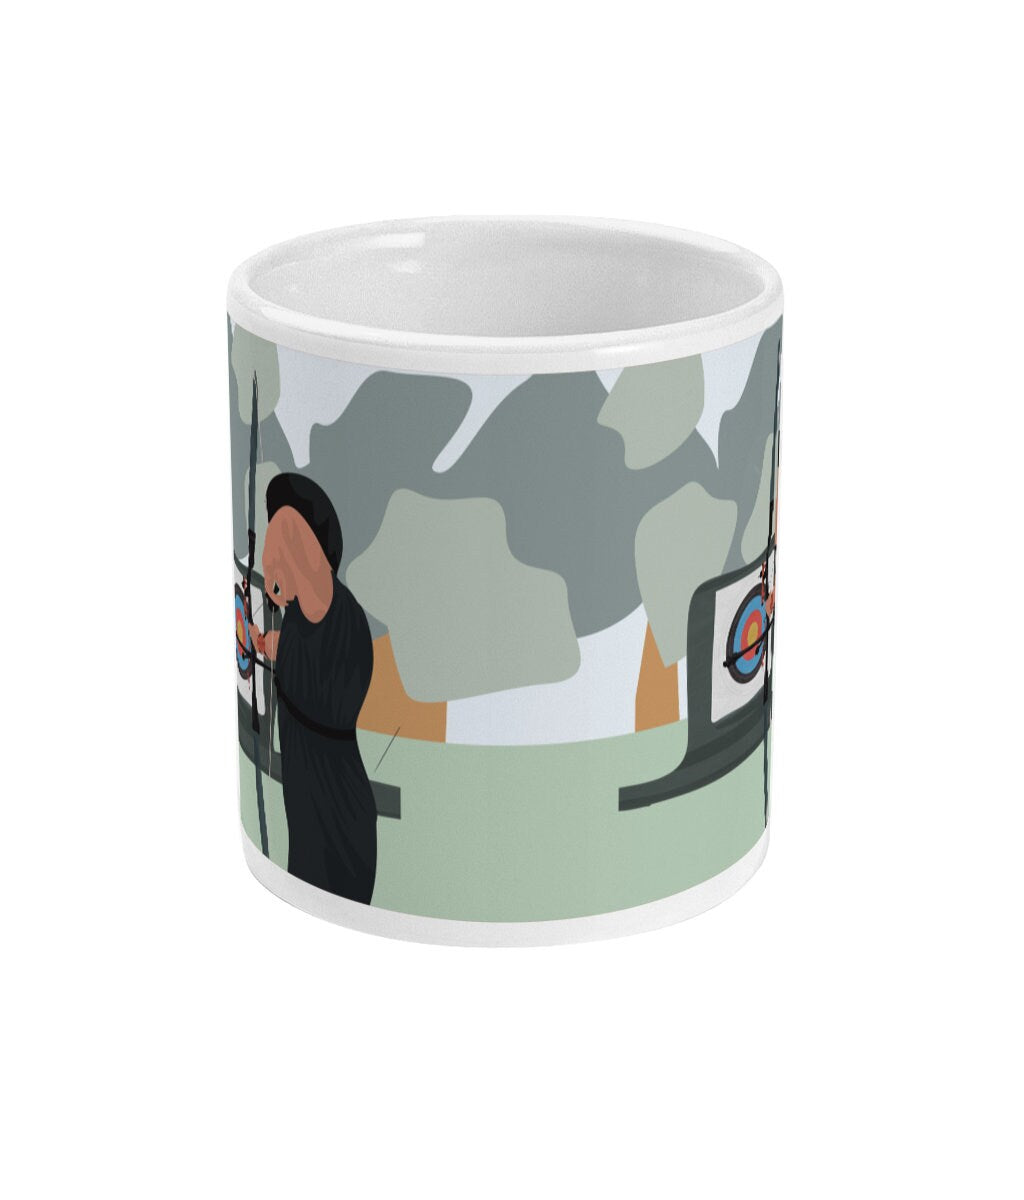 Archery cup or mug "The archer" - customizable